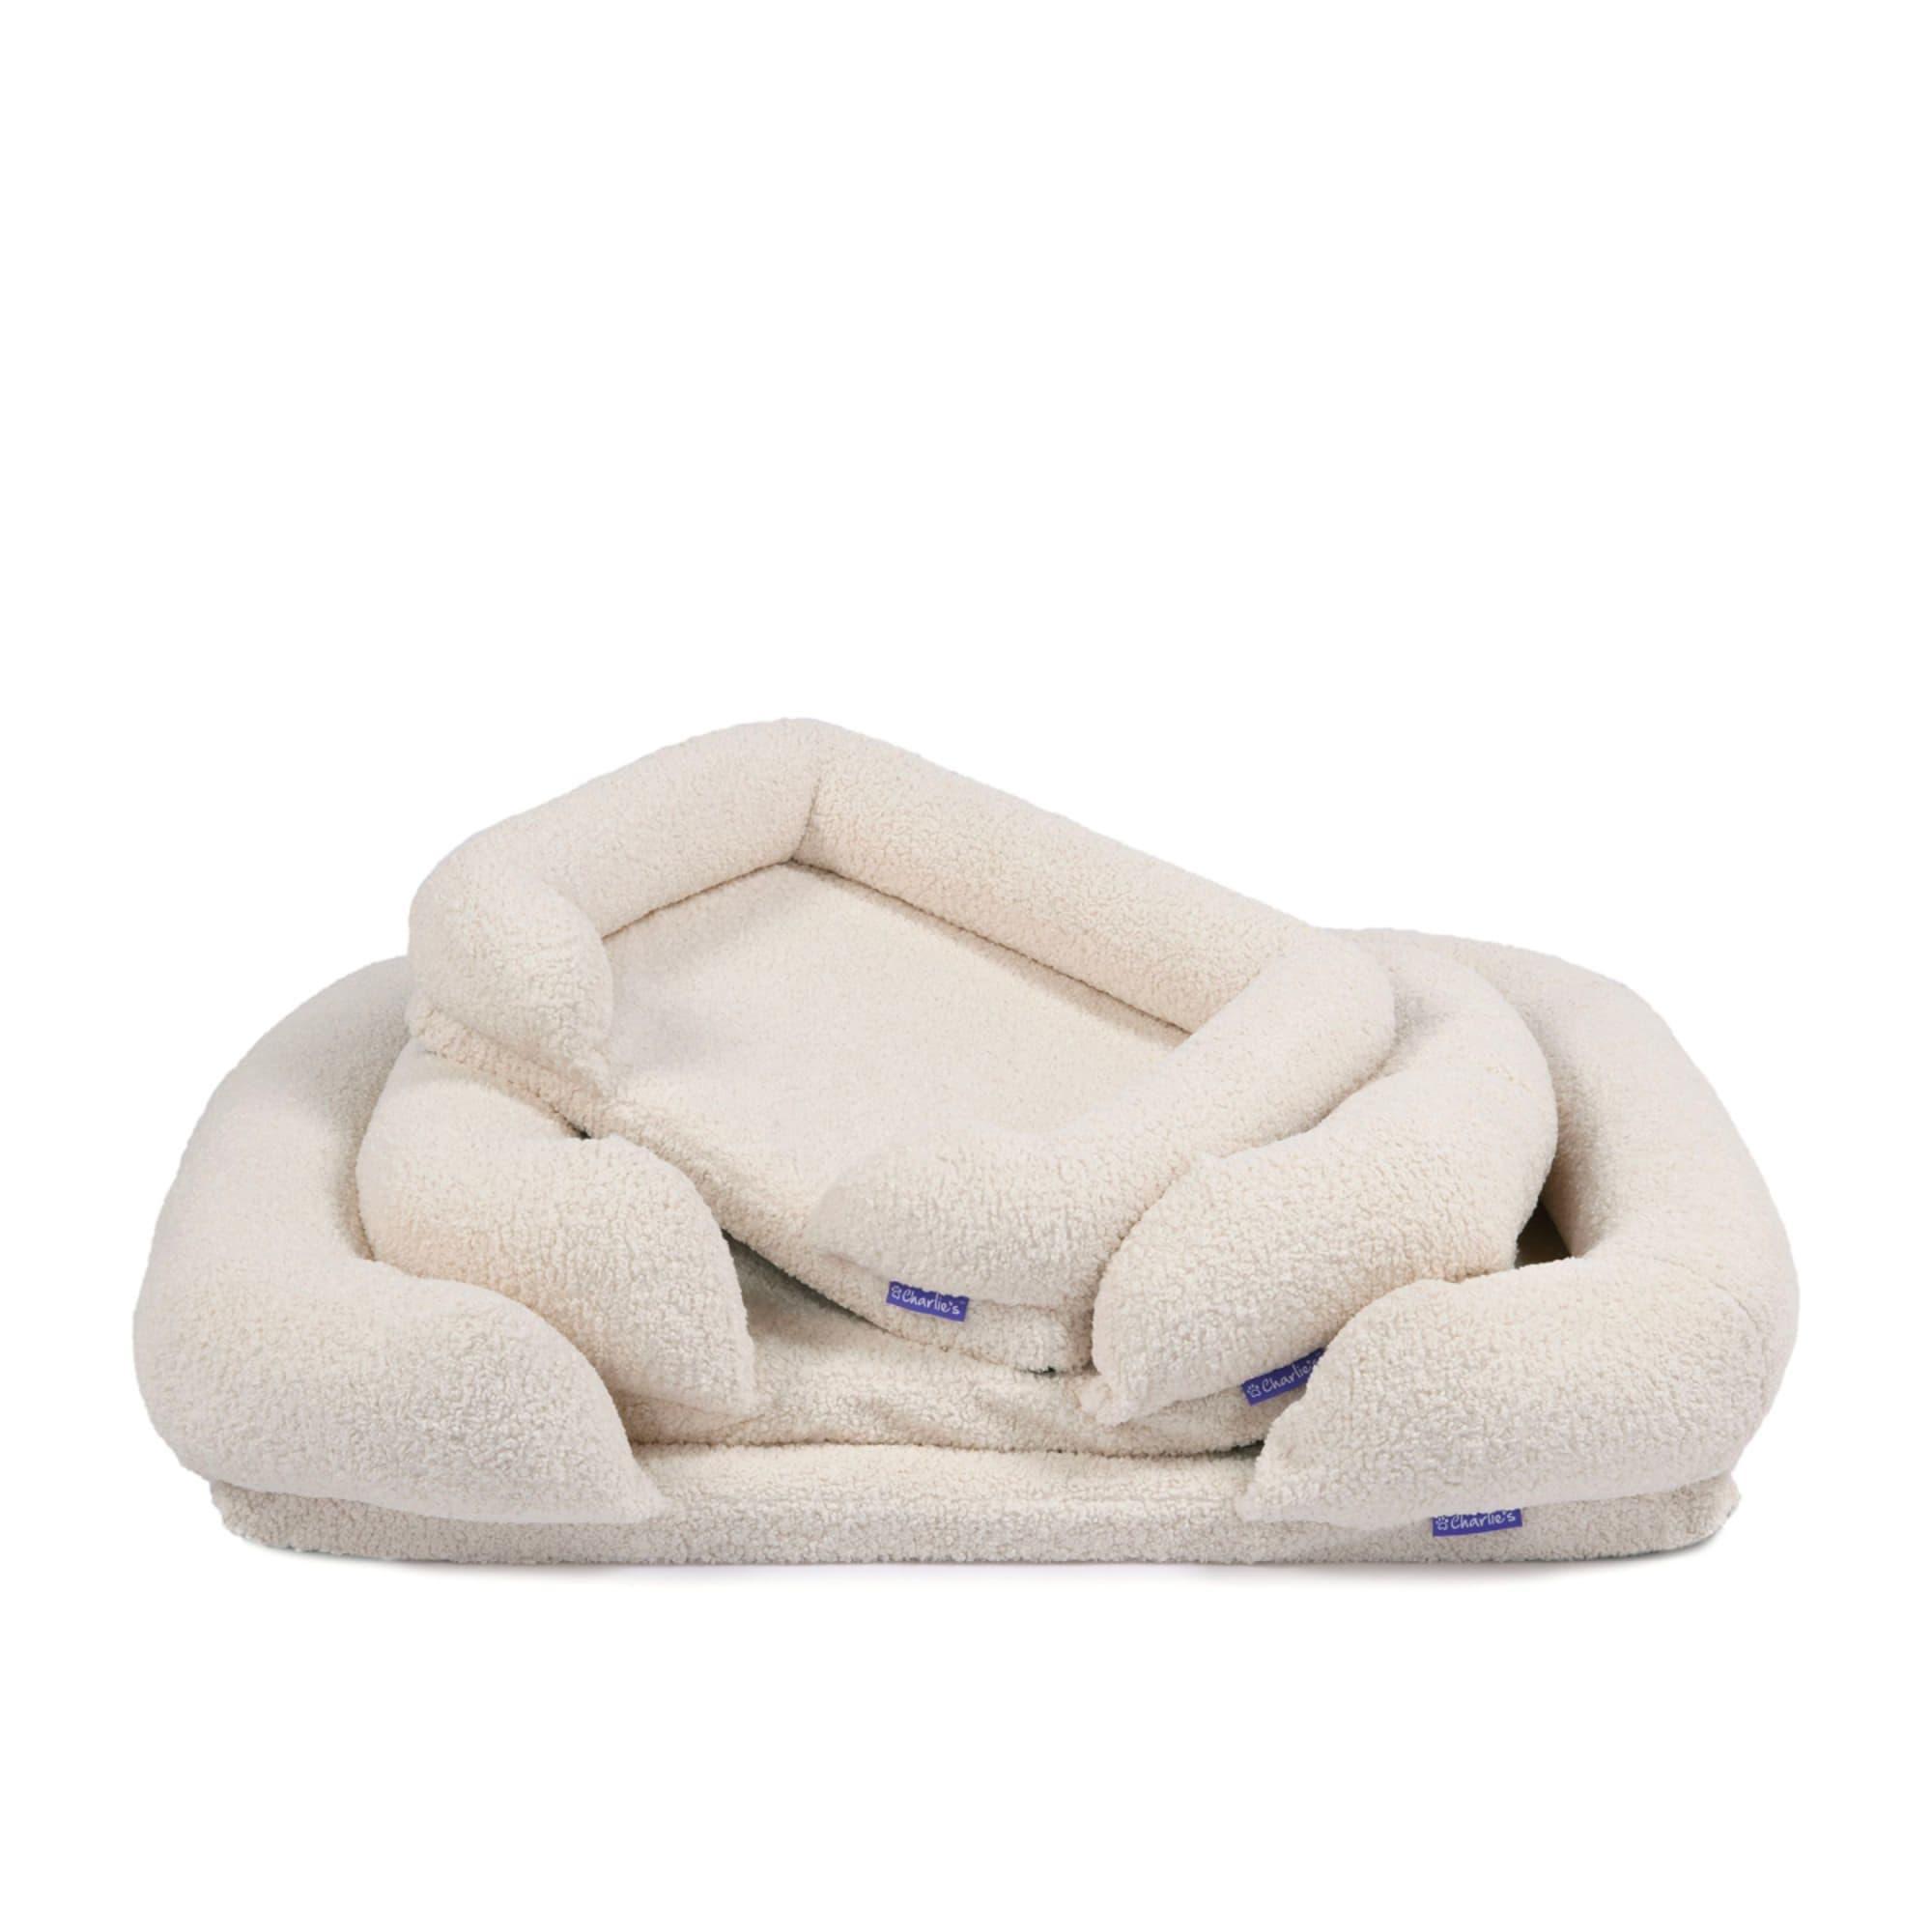 Charlie's Teddy Fleece Orthopedic Memory Foam Sofa Dog Bed Medium Cream Image 6